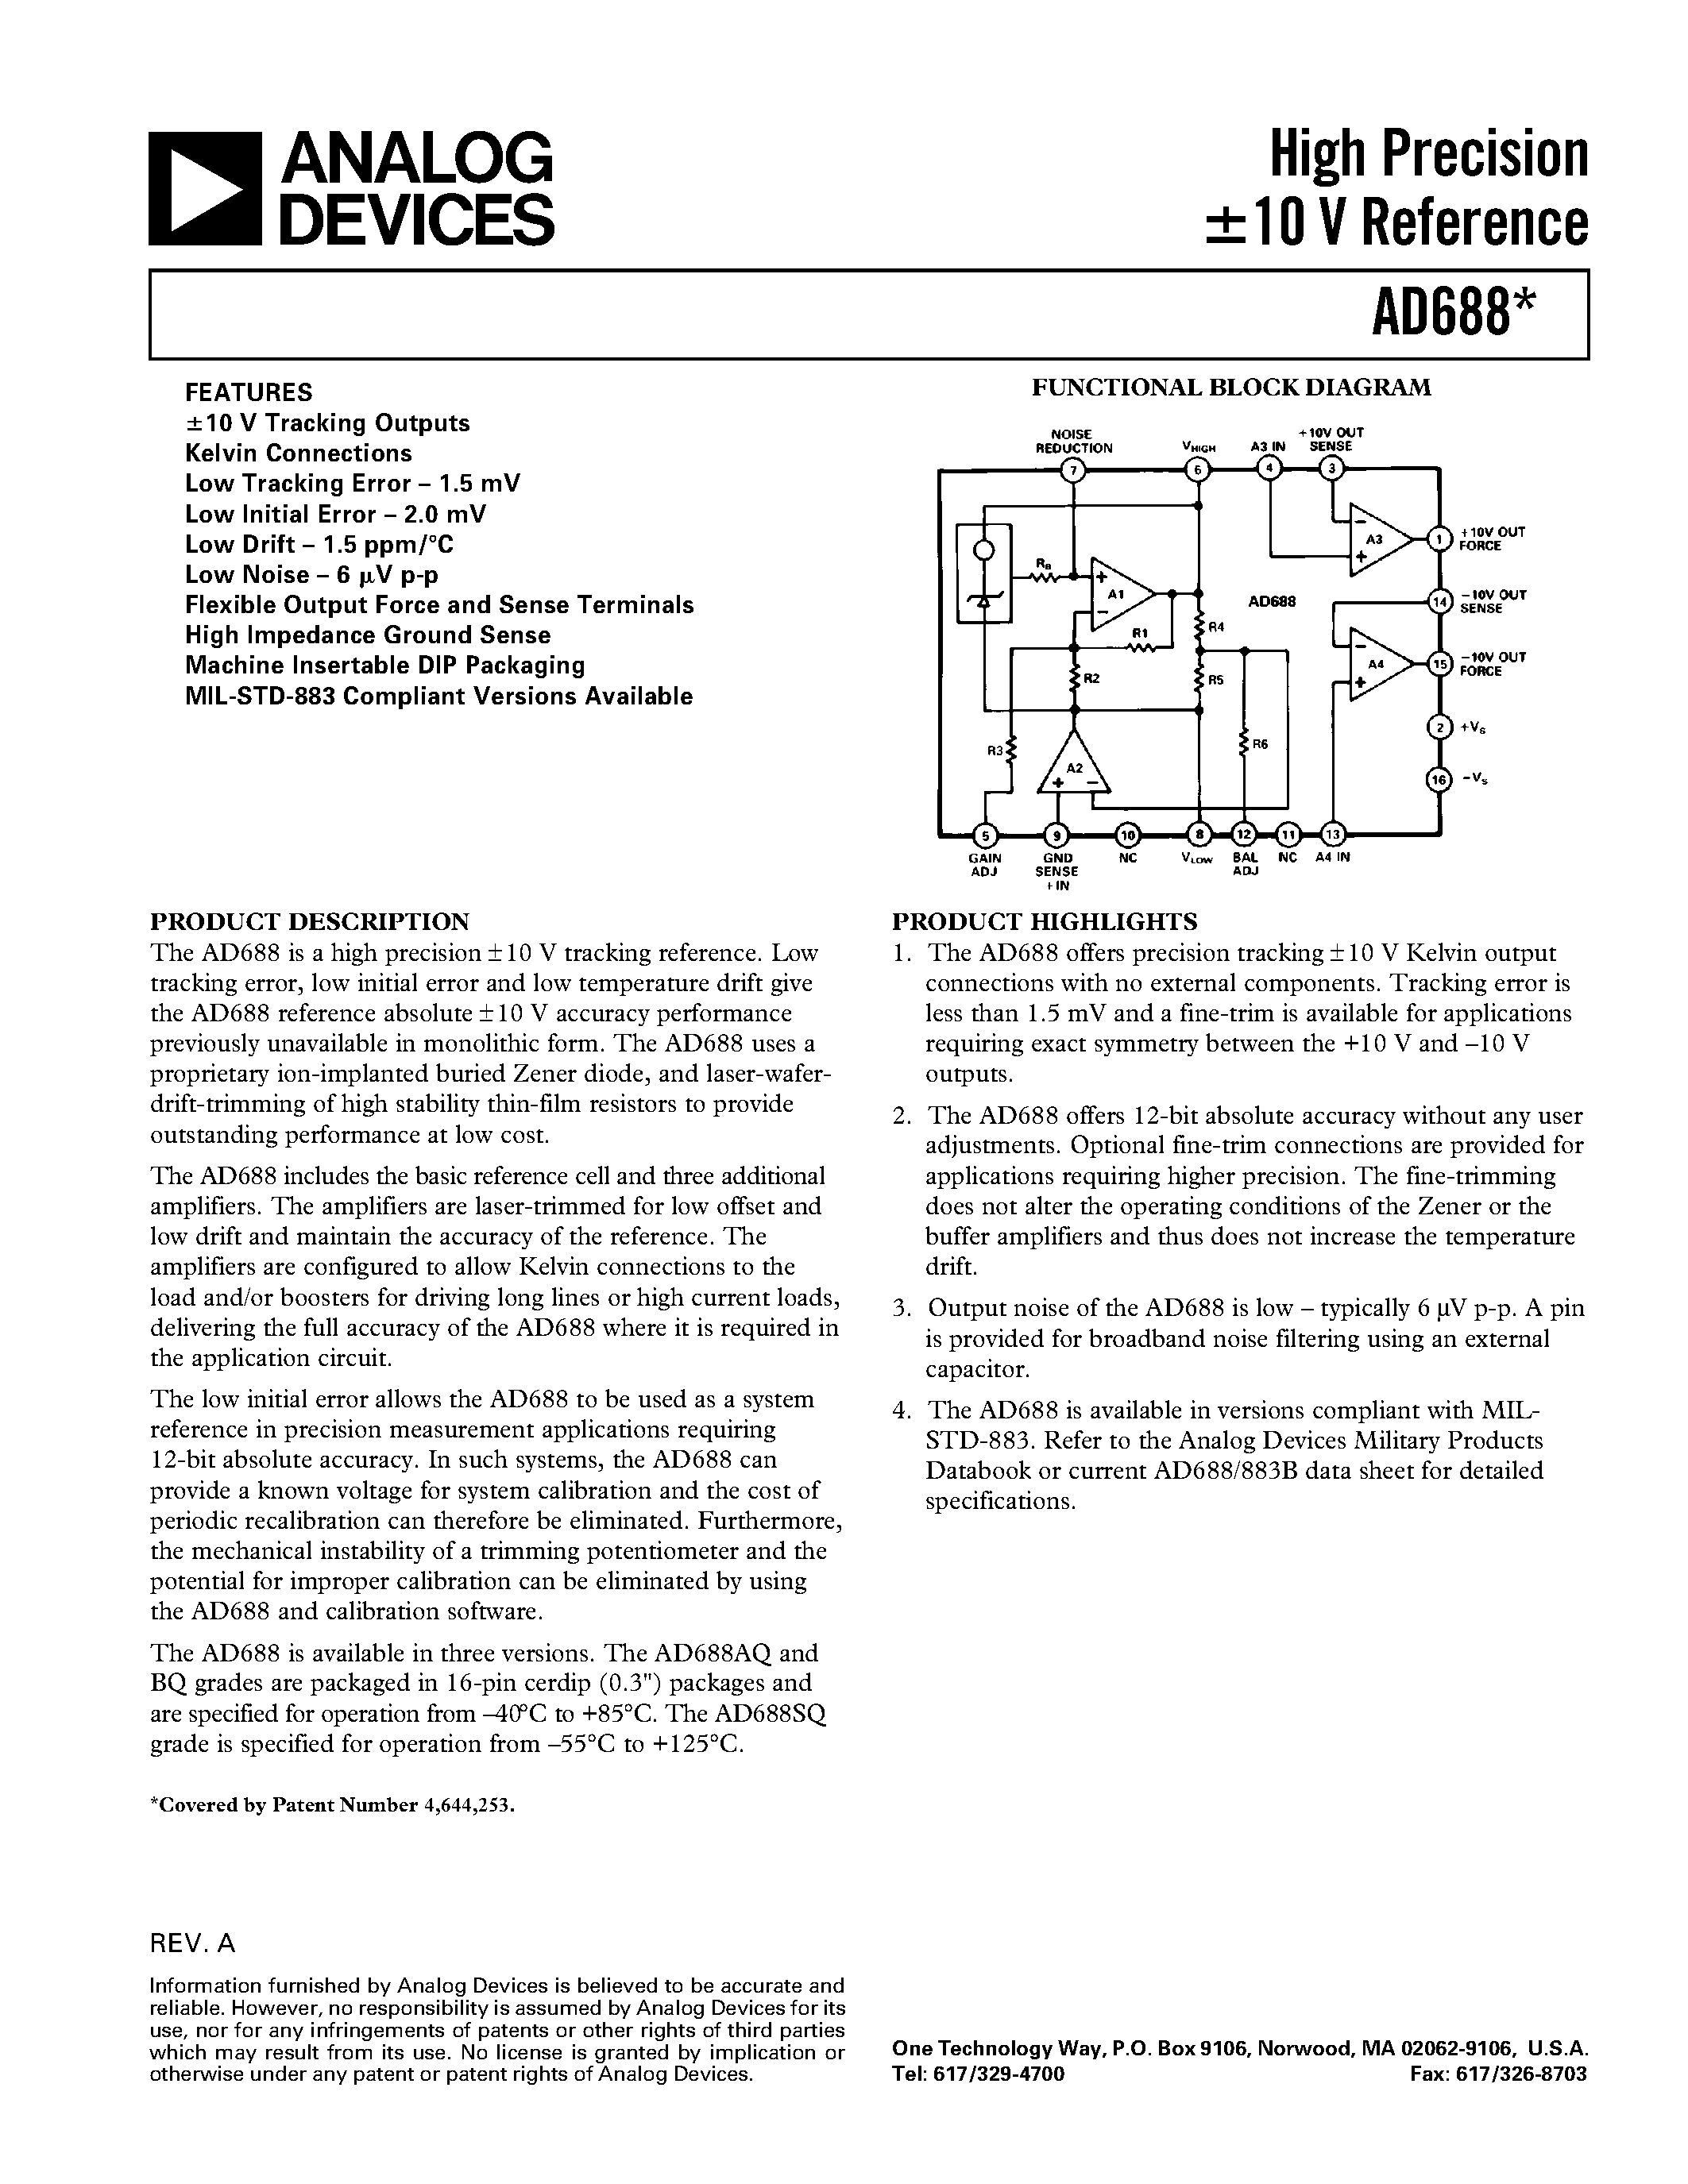 Datasheet AD688BQ - High Precision +-10 V Reference page 1